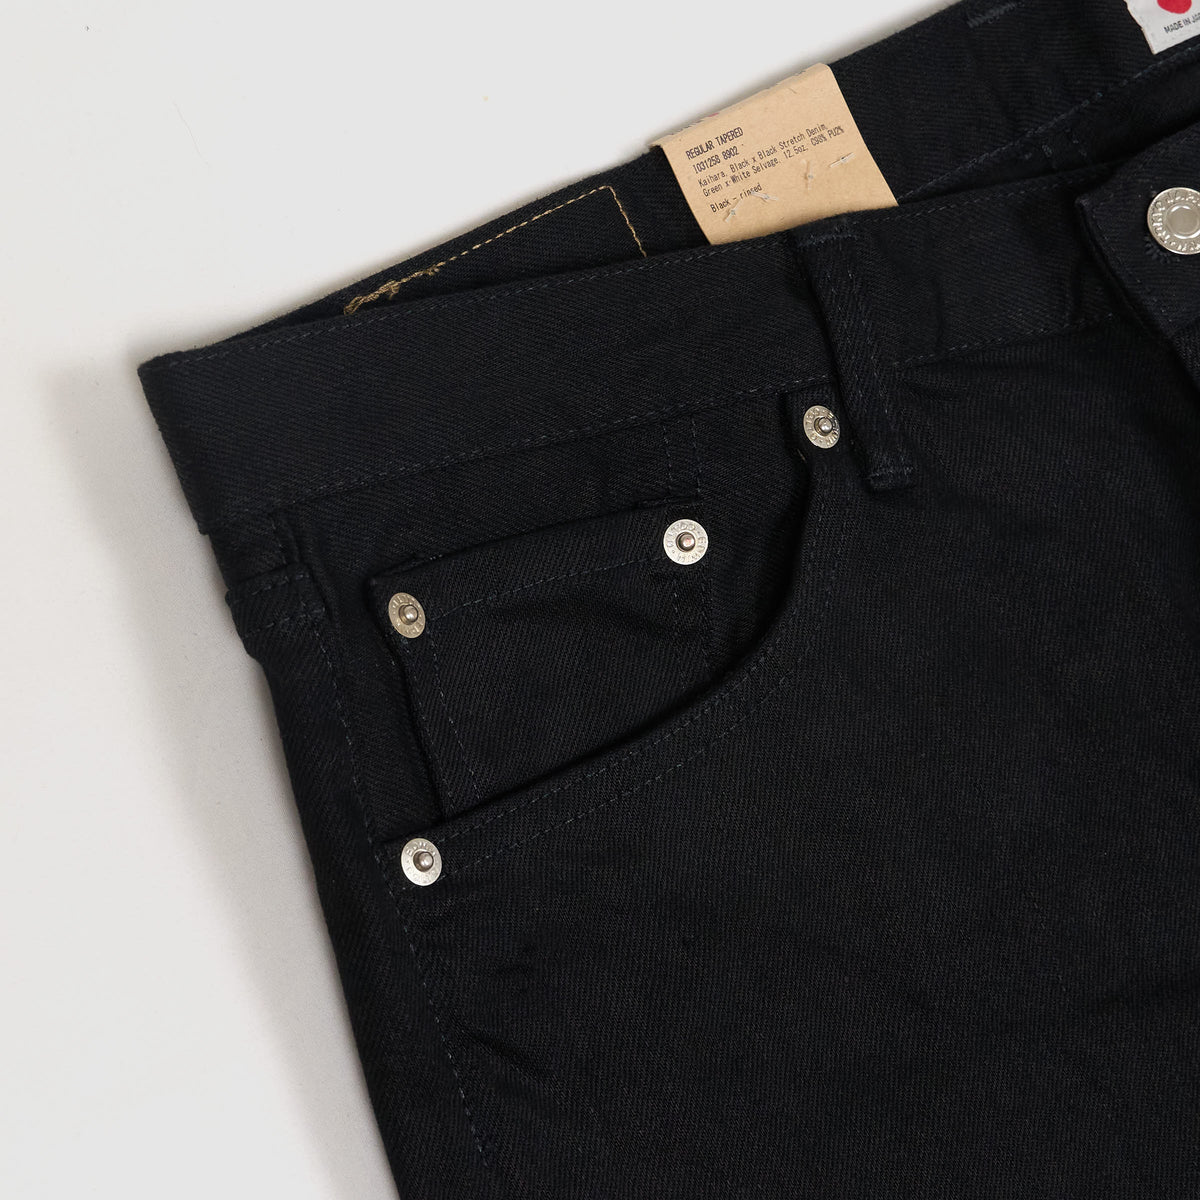 Edwin Regular Tapered Black Kurabo 5-Pocket Jeans